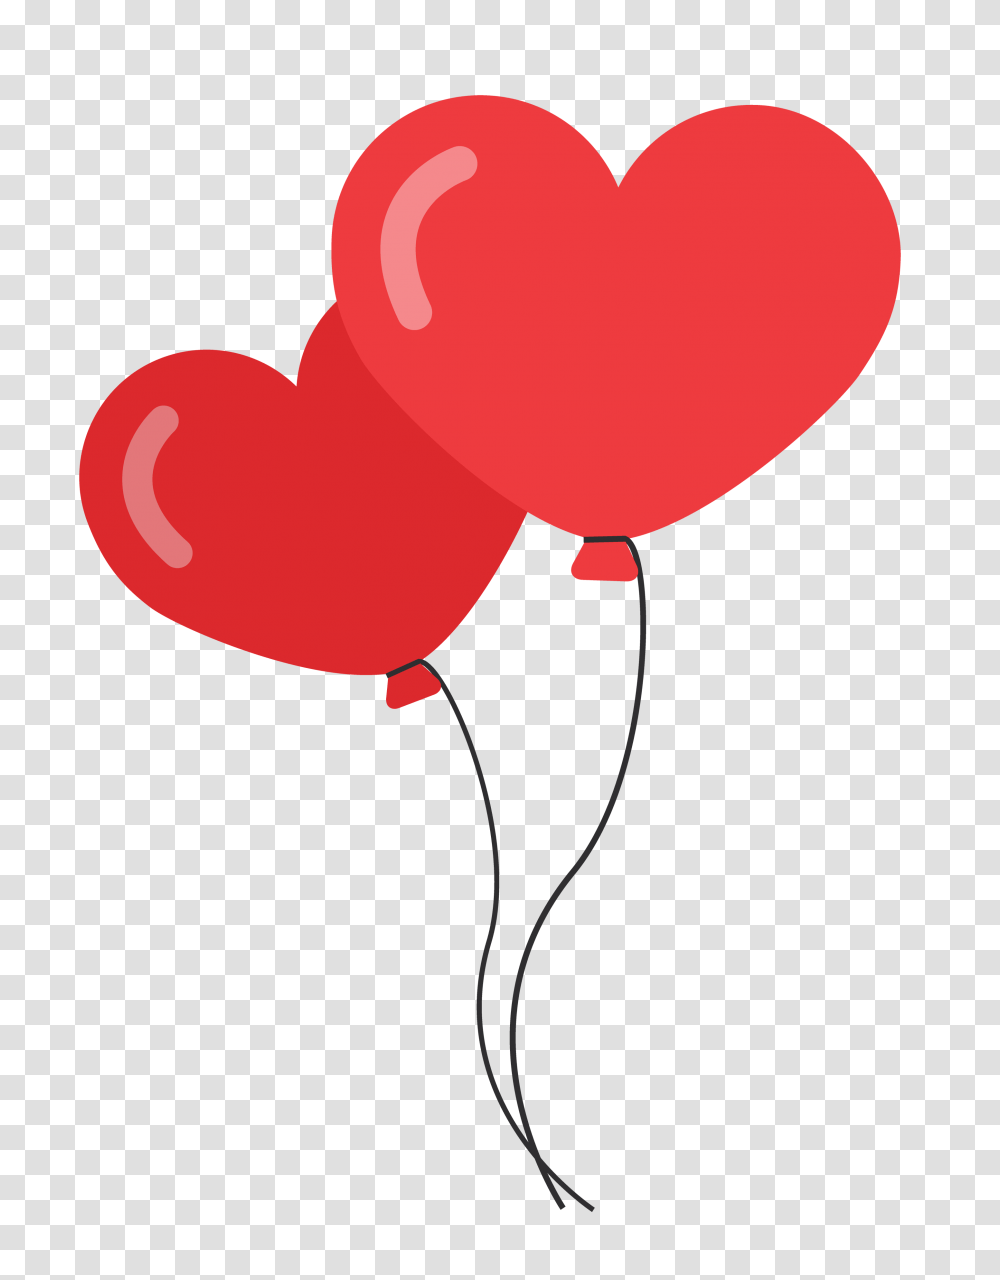 Heart Shaped Balloons Image Pngpix Heart Shape Balloon, Pin Transparent Png